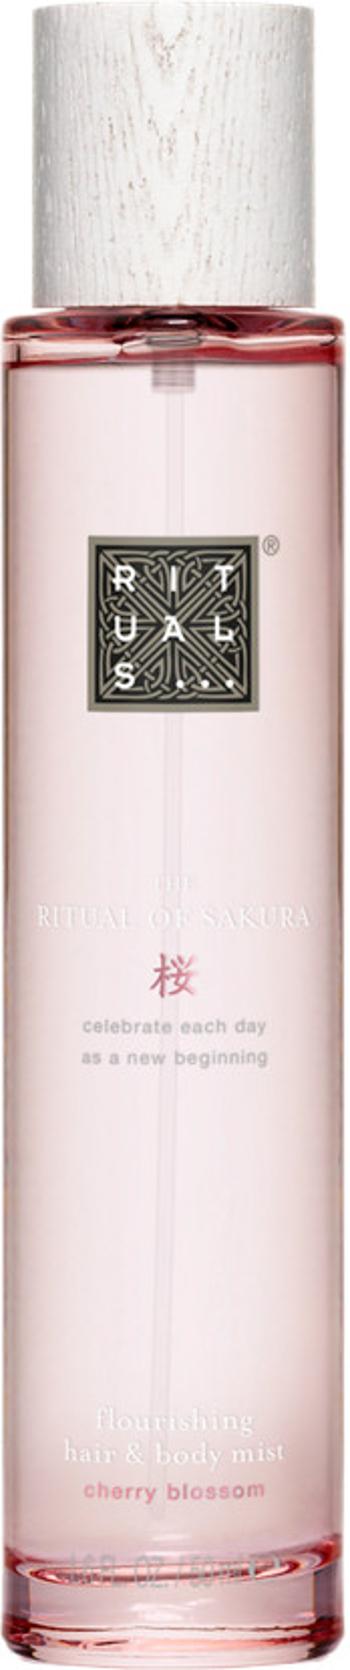 Rituals Sakura Sprej na tělo a vlasy 50 ml